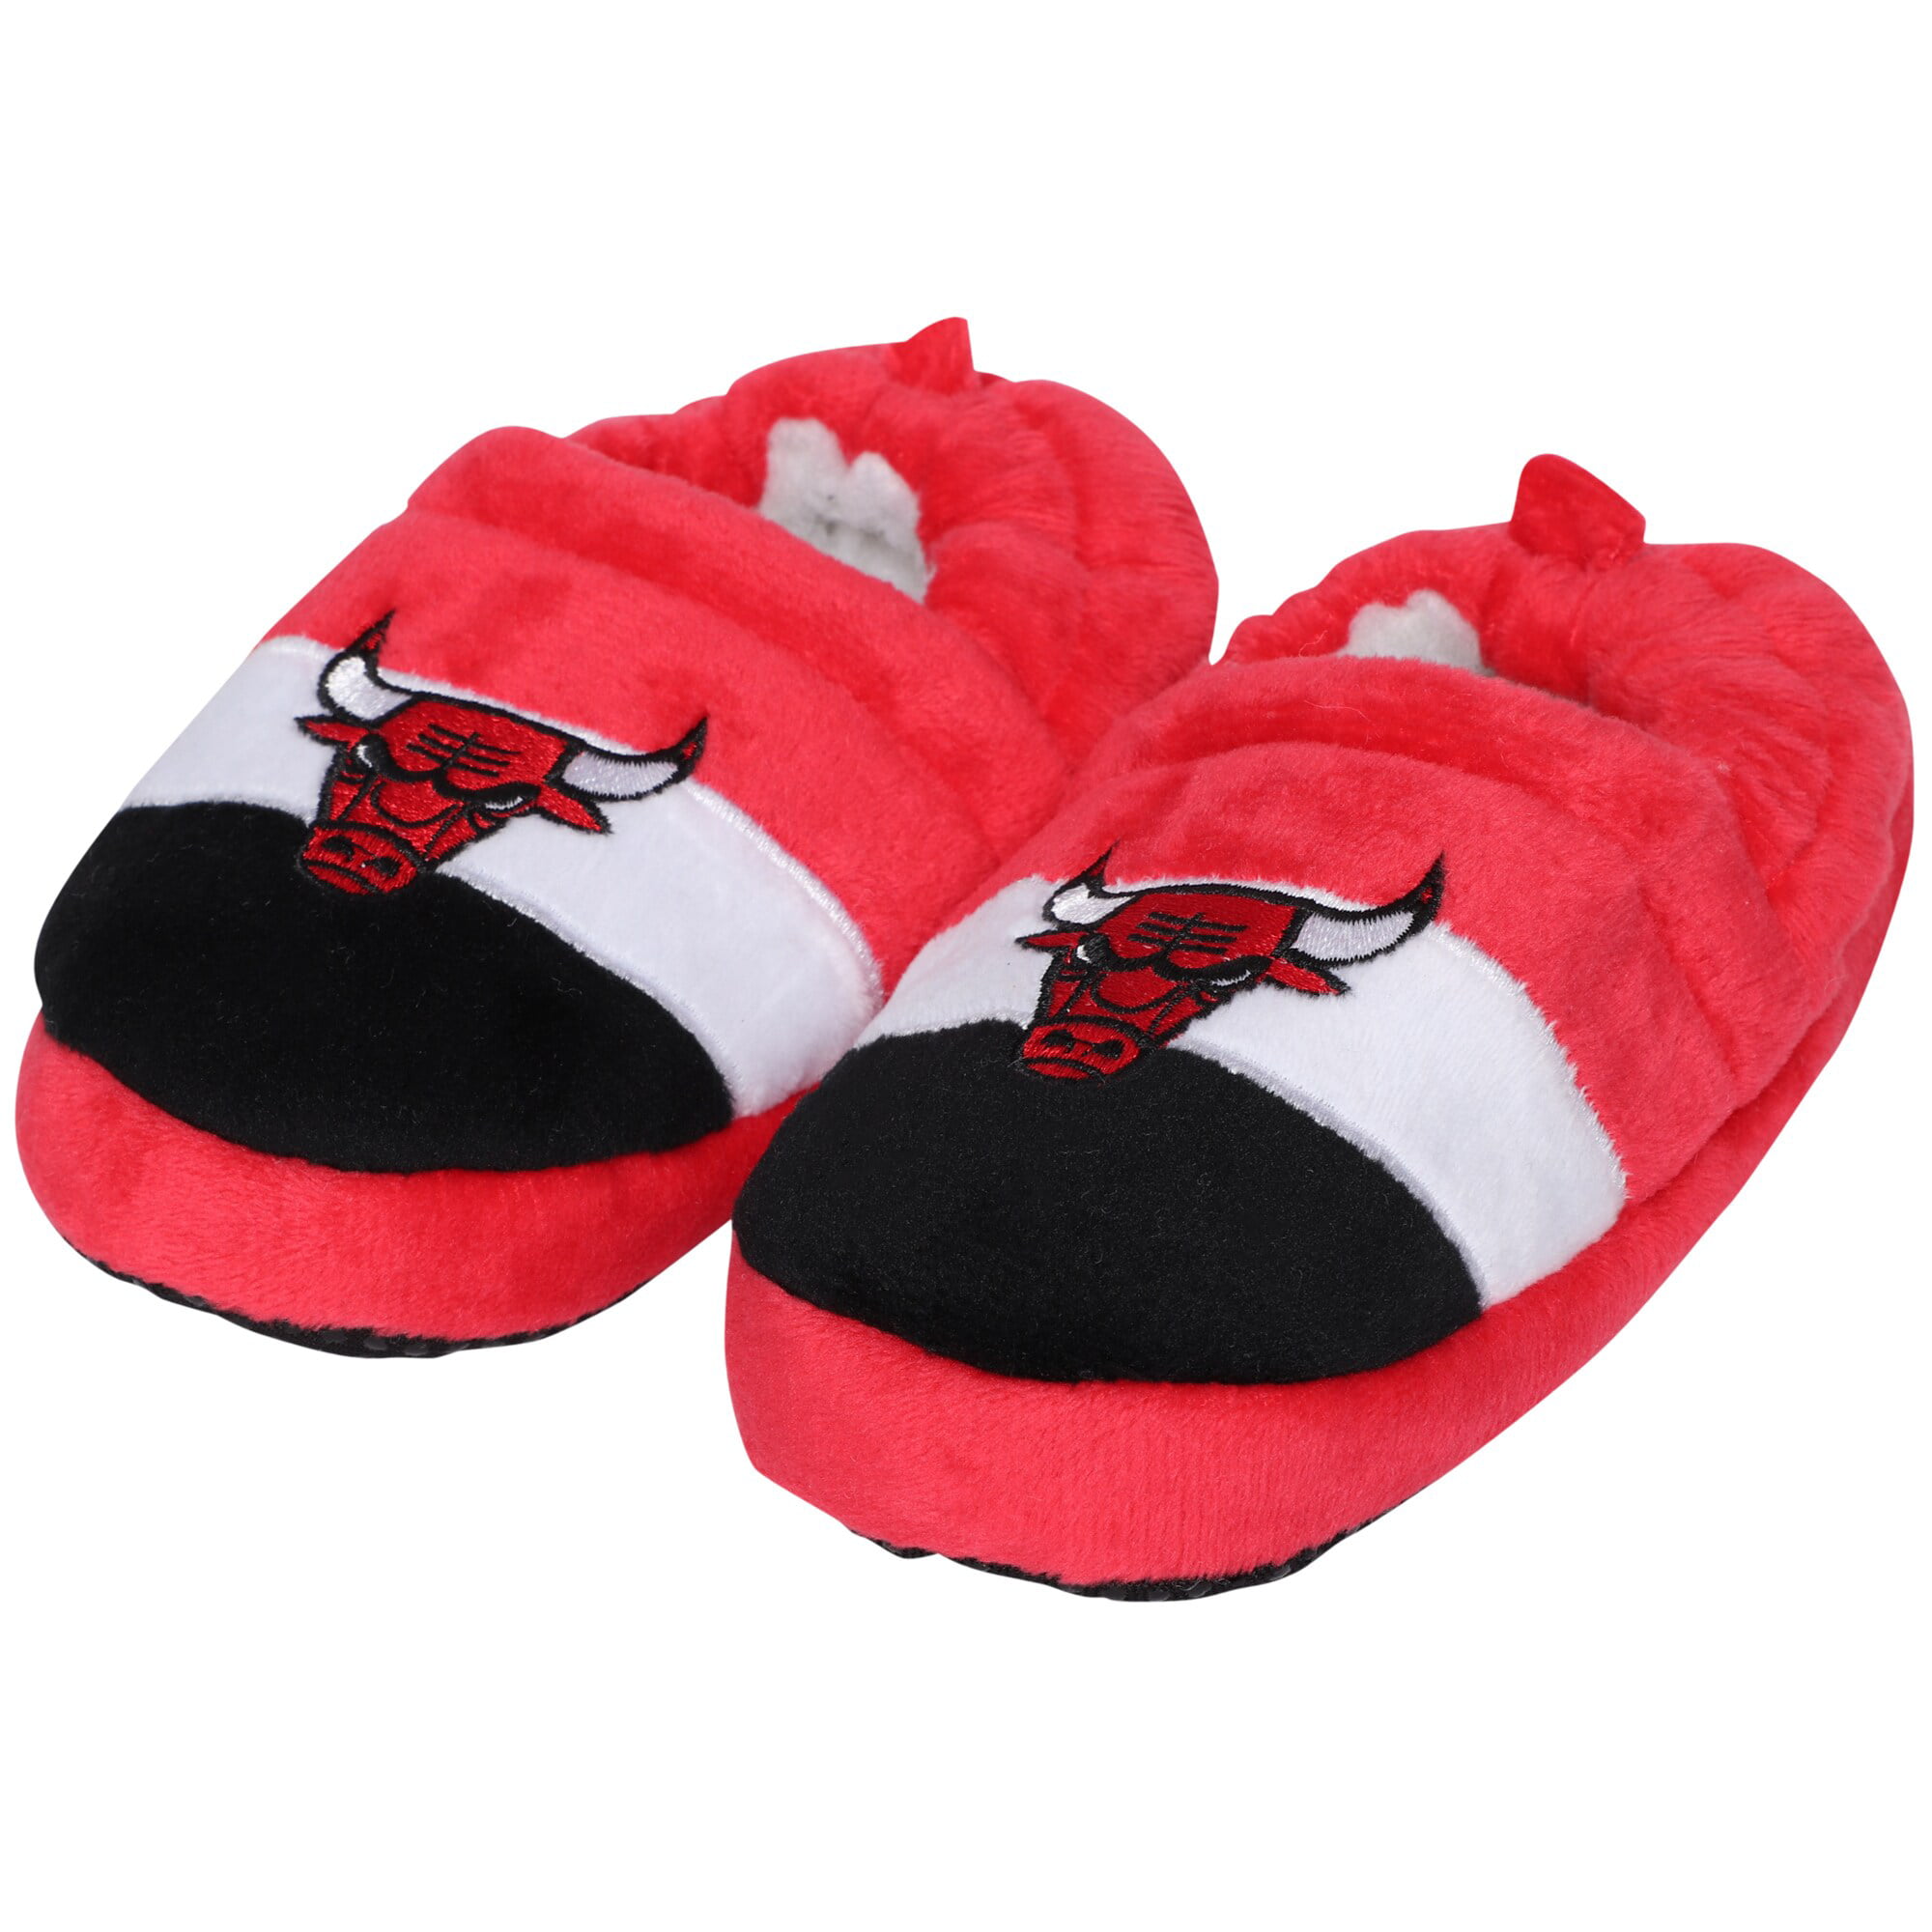 steelers slippers walmart